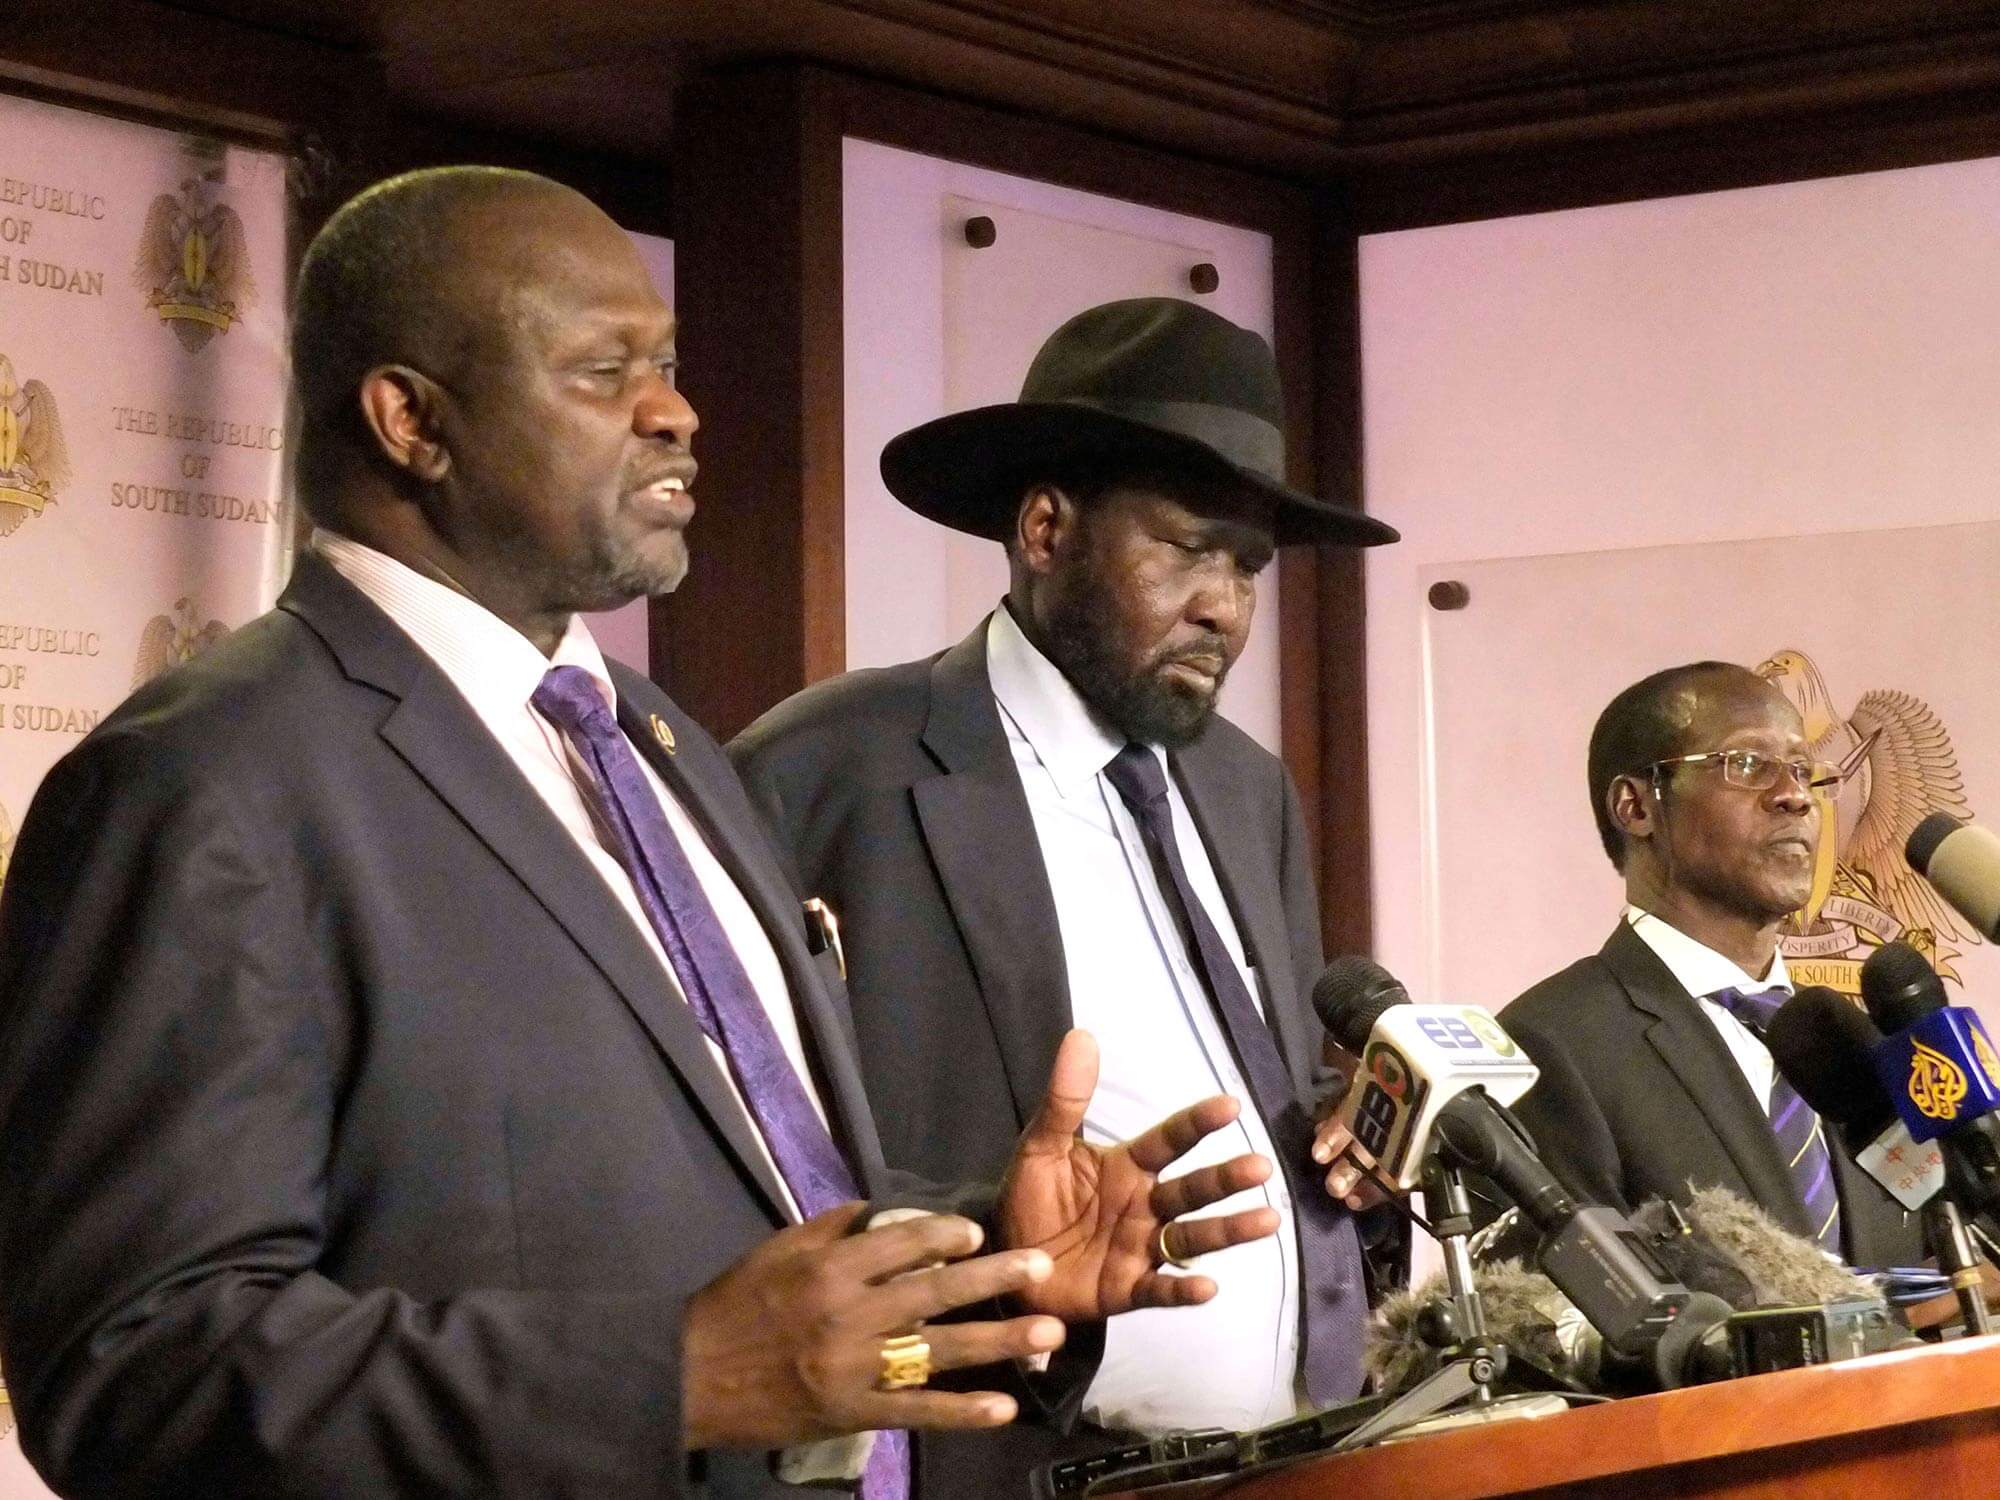 Image of President Salva Kiir and Vice President Riek Machar asking for peace